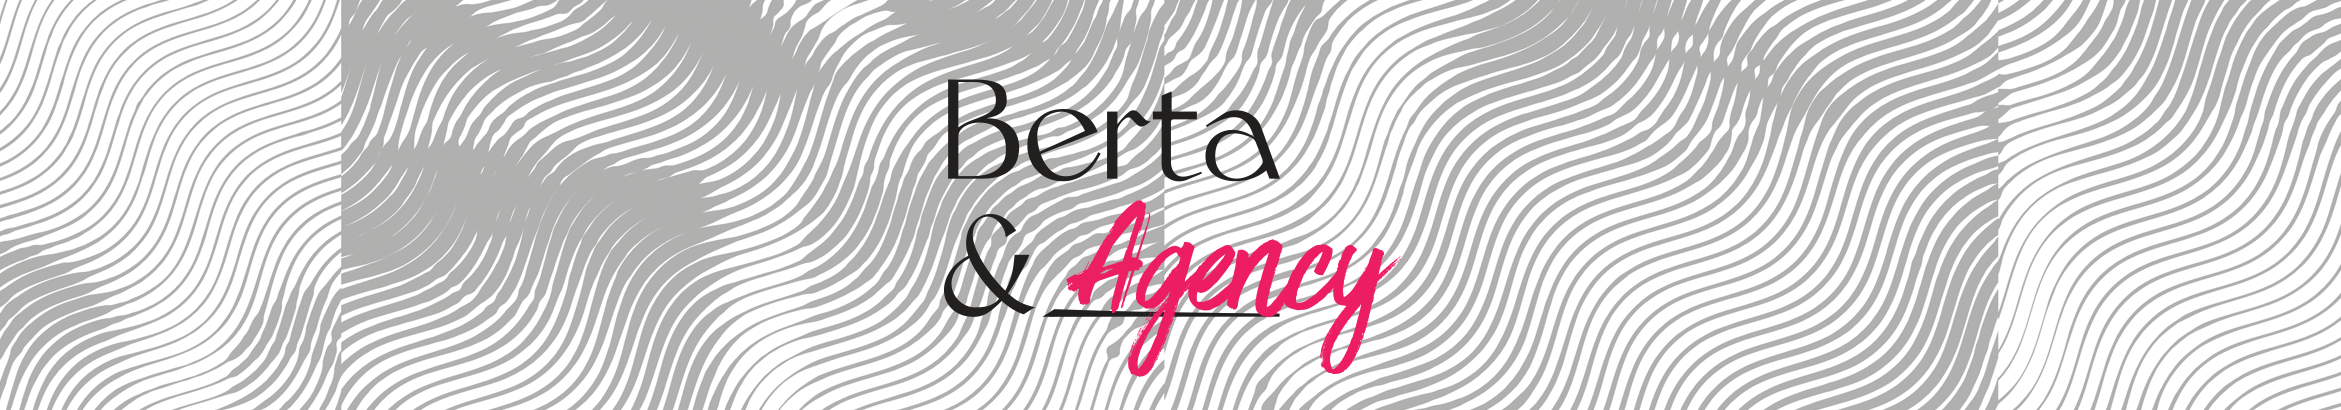 Berta& design's profile banner